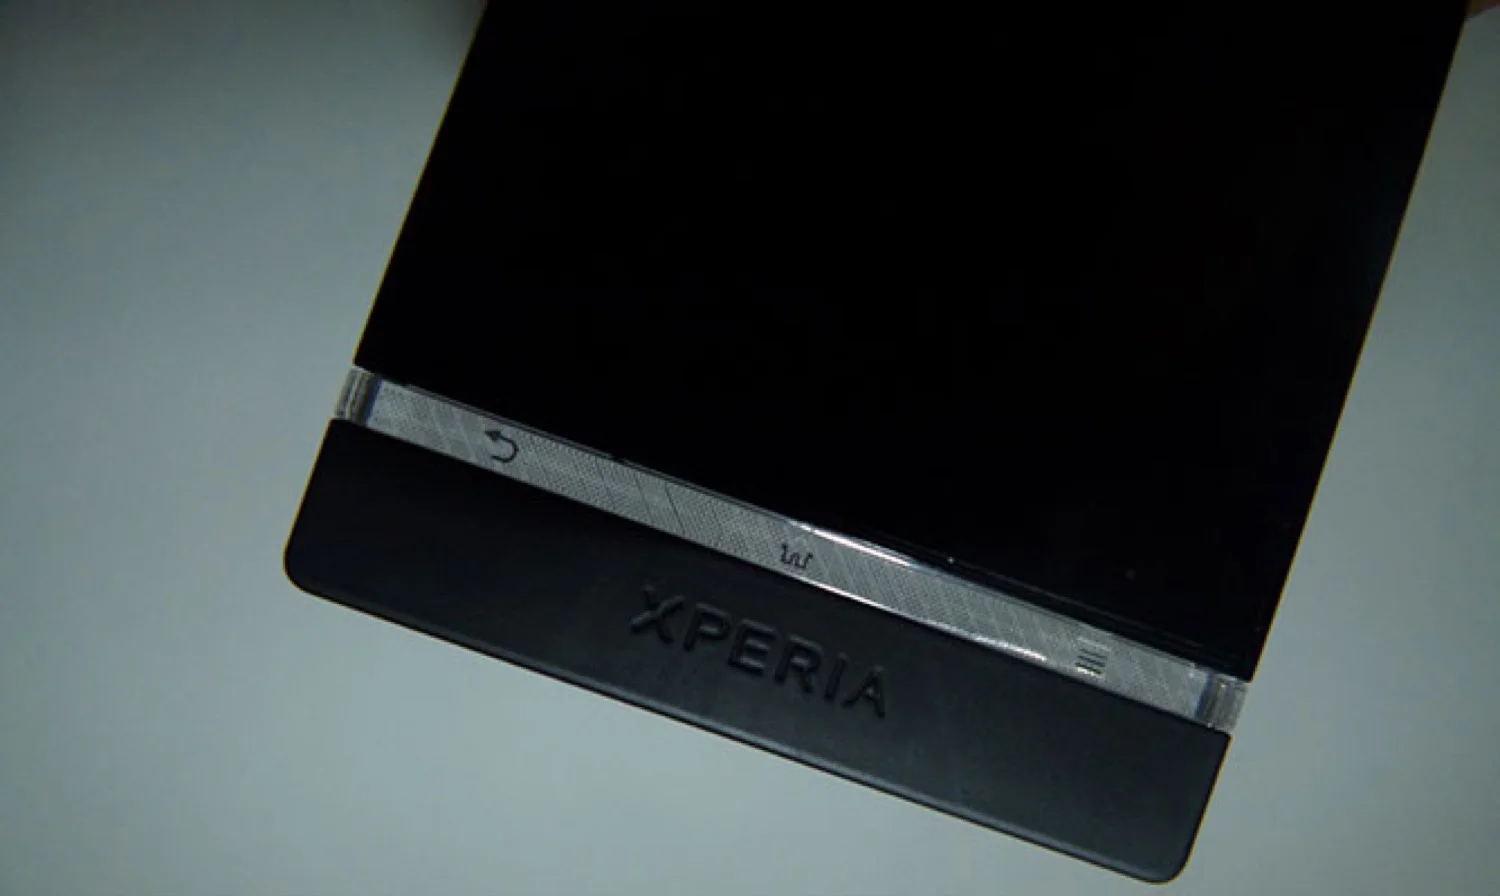 Review del smartphone Sony Xperia U